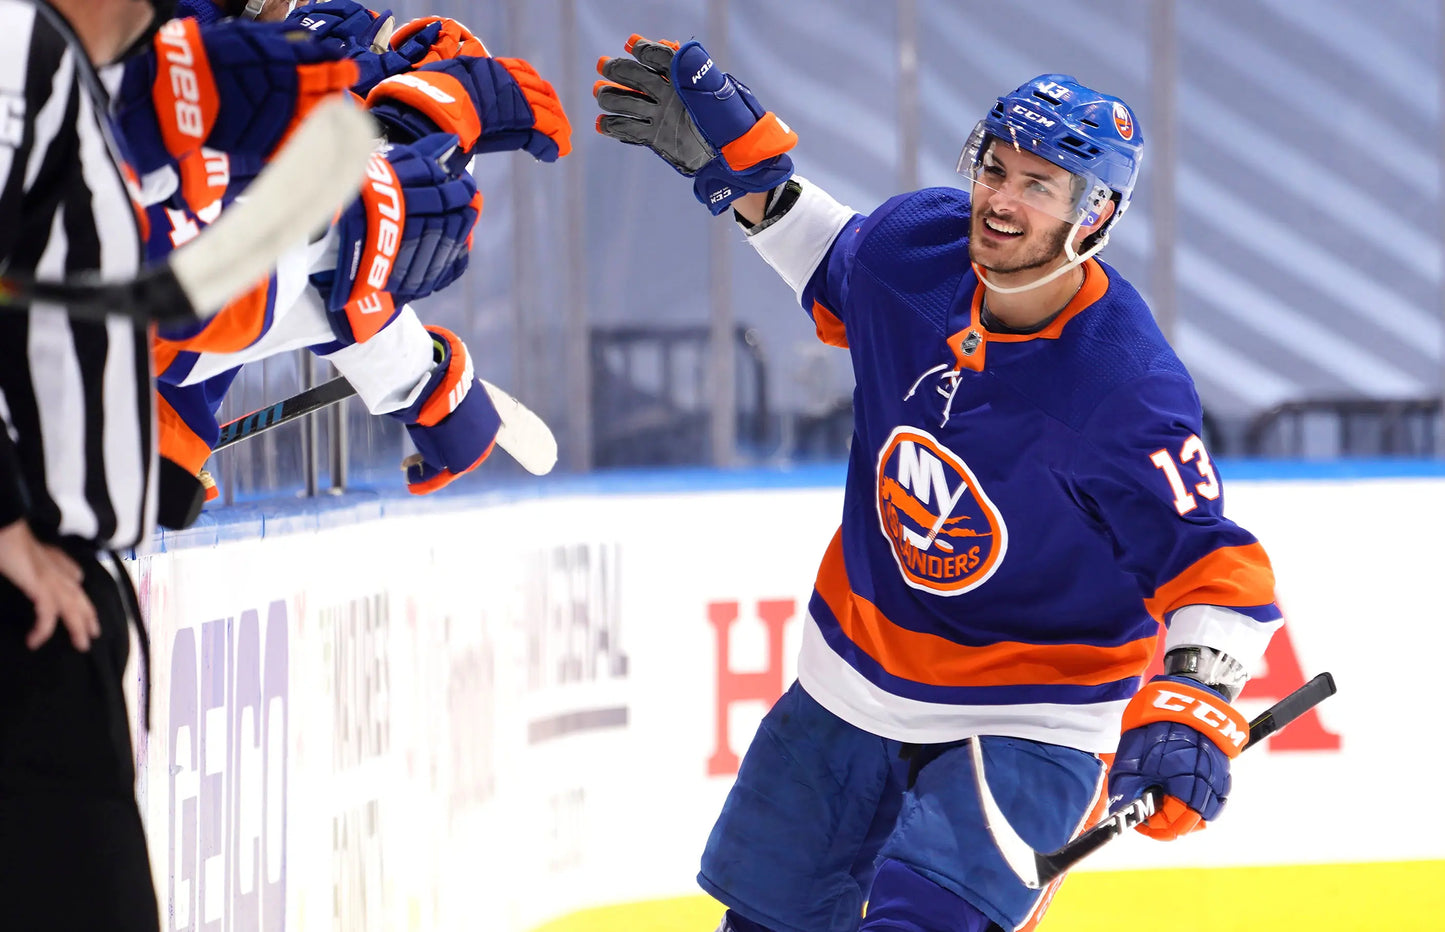 New York Islanders Mathew Barzal Adidas NHL Breakaway Player Blue Home Jersey